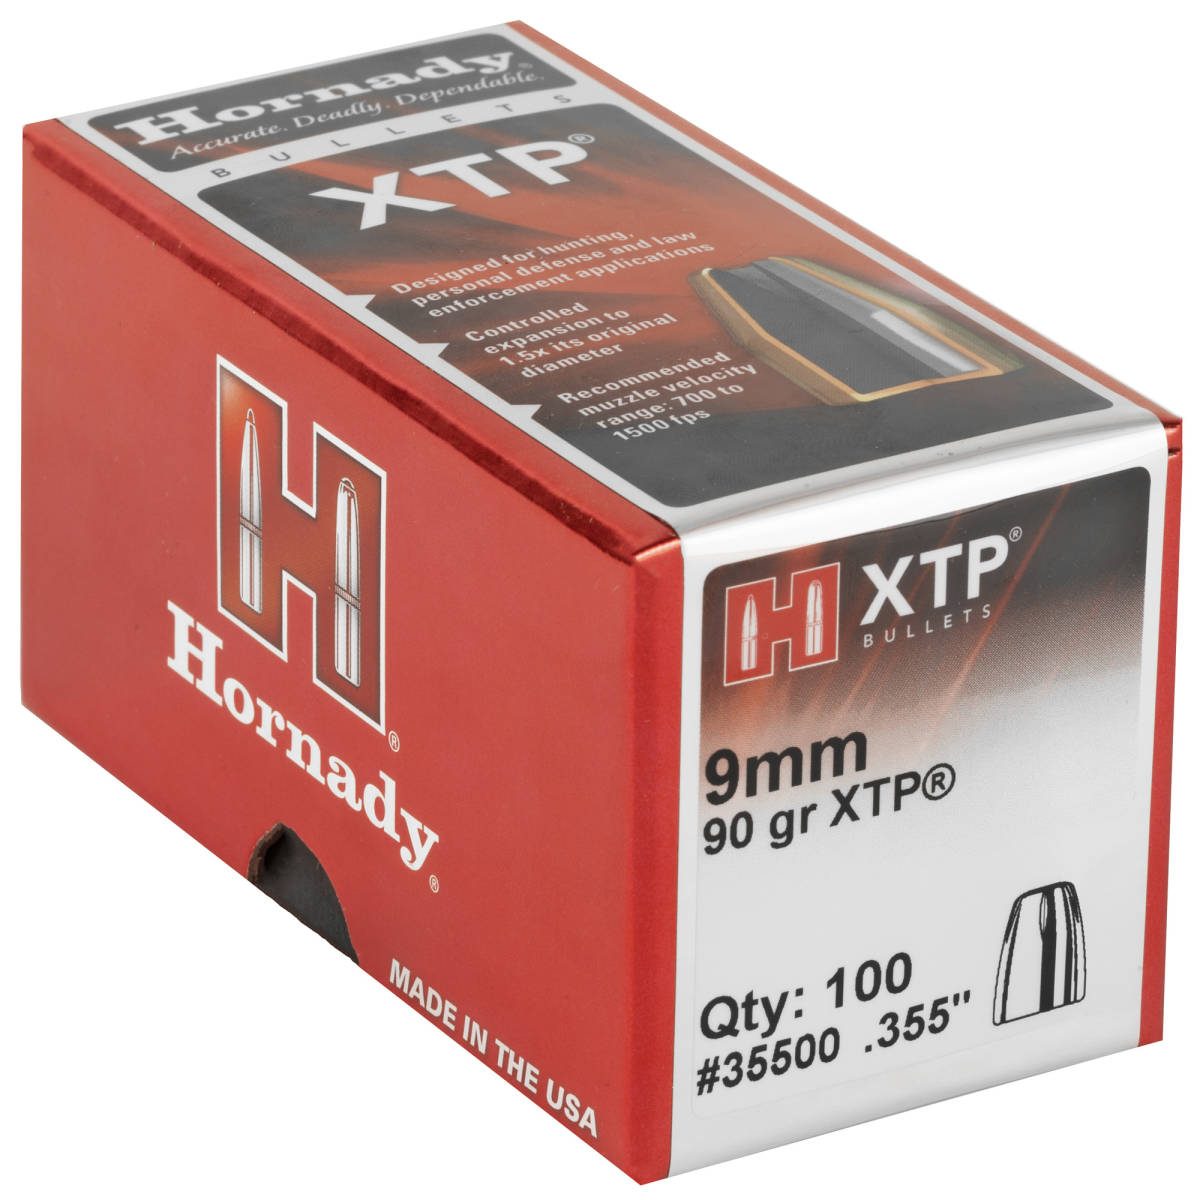 Hornady 9mm Caliber 90 Grain XTP Hollow Point Bullets 100 CT Box #3550-img-1